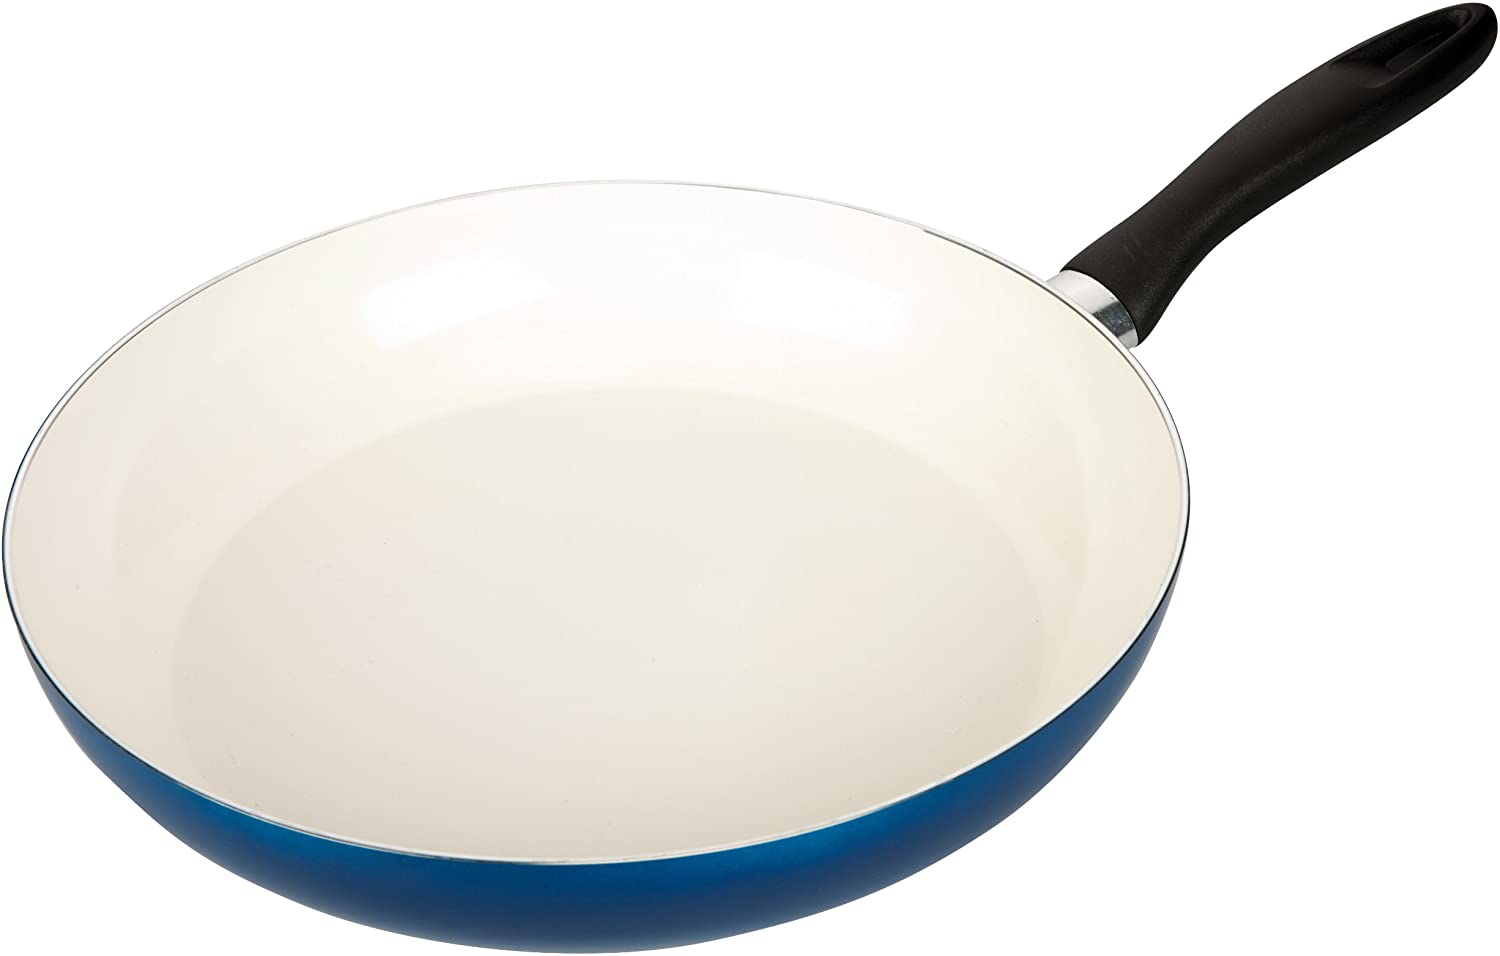 Tescoma 595032 Ecopresto Frying pan with Ceramic coating Diameter 32 cm